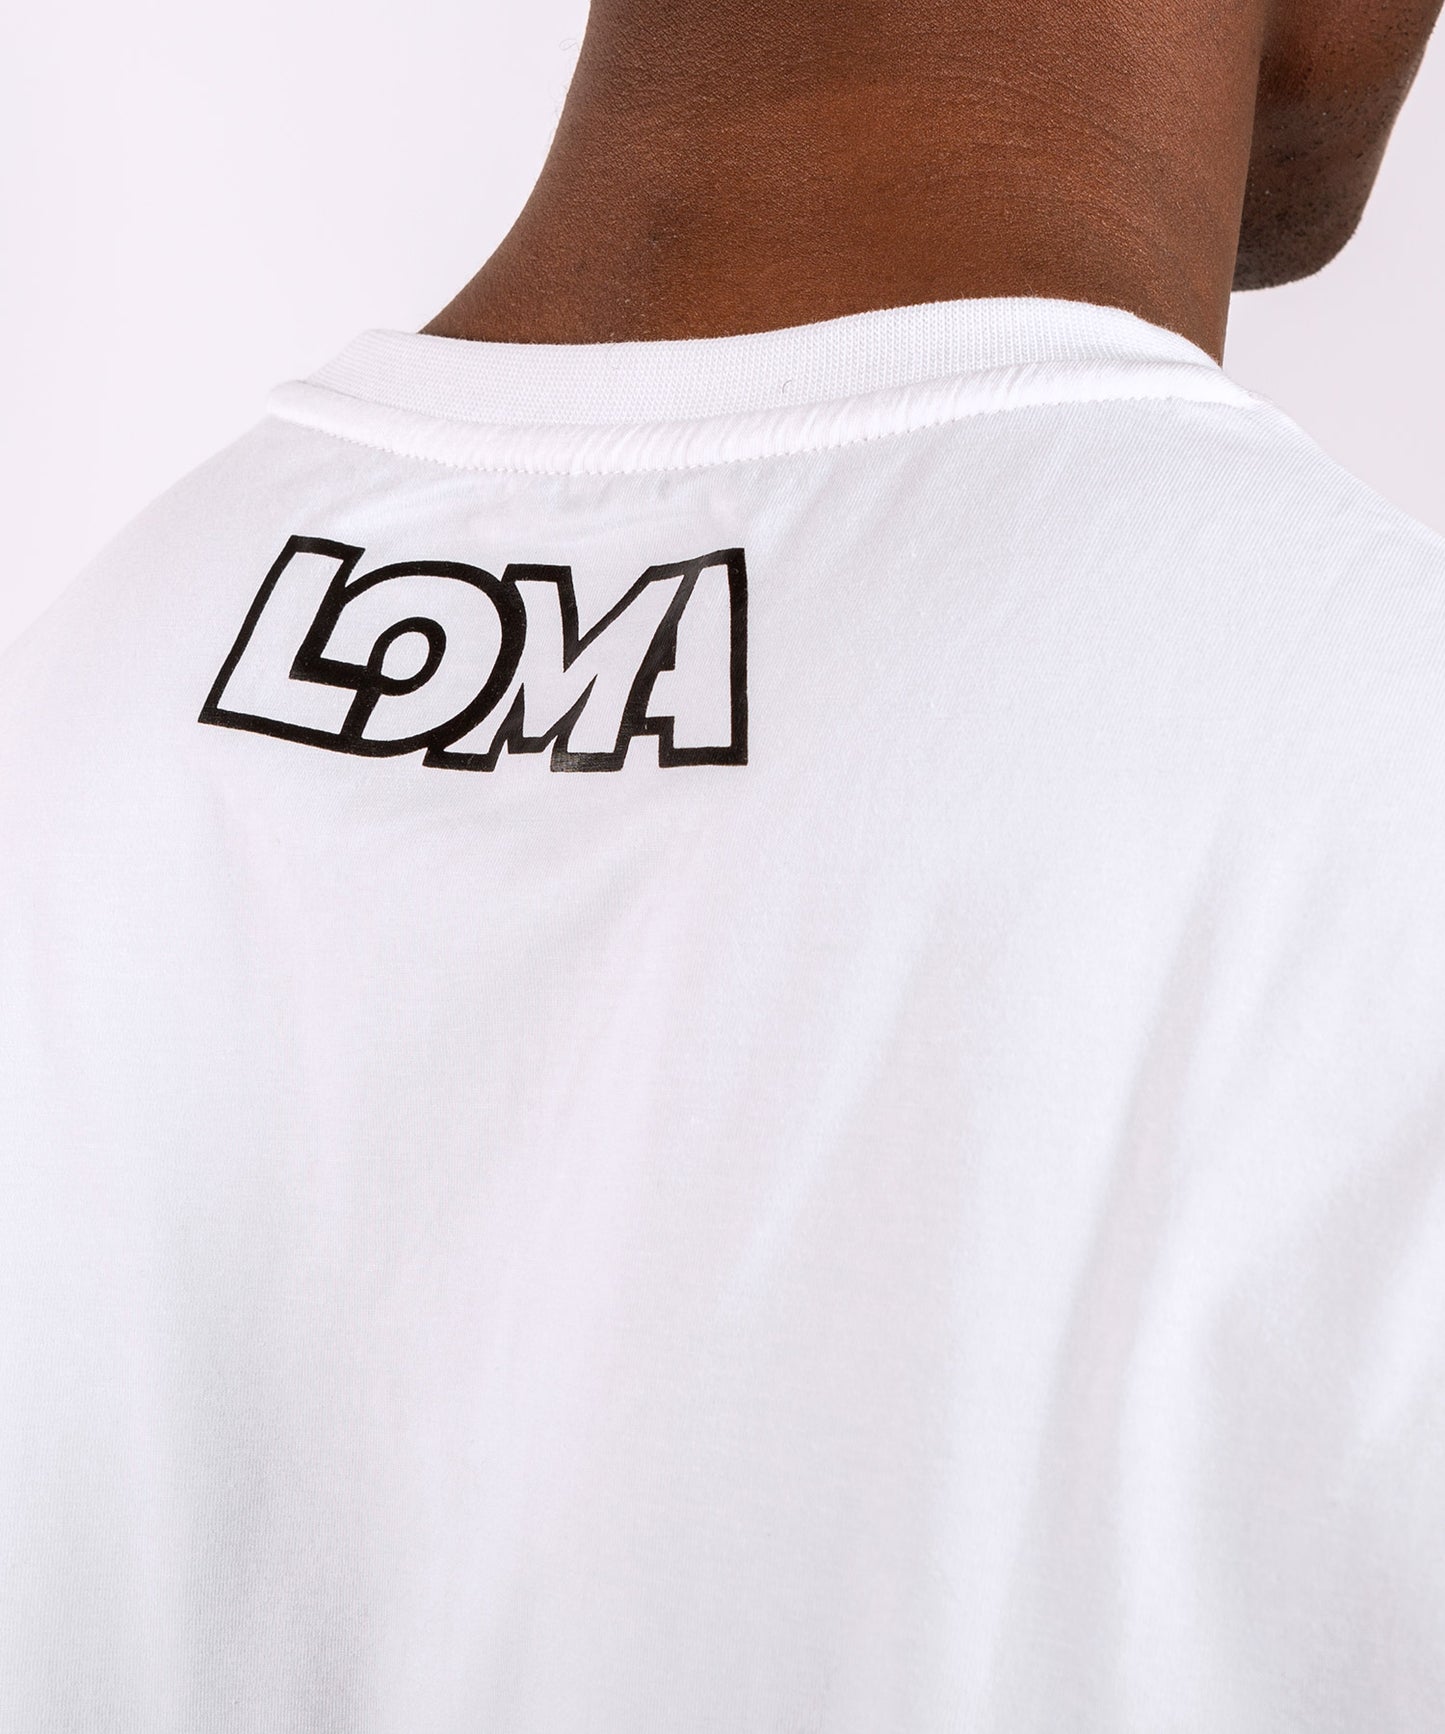 Venum Origins T-shirt Loma Edition - White/Black